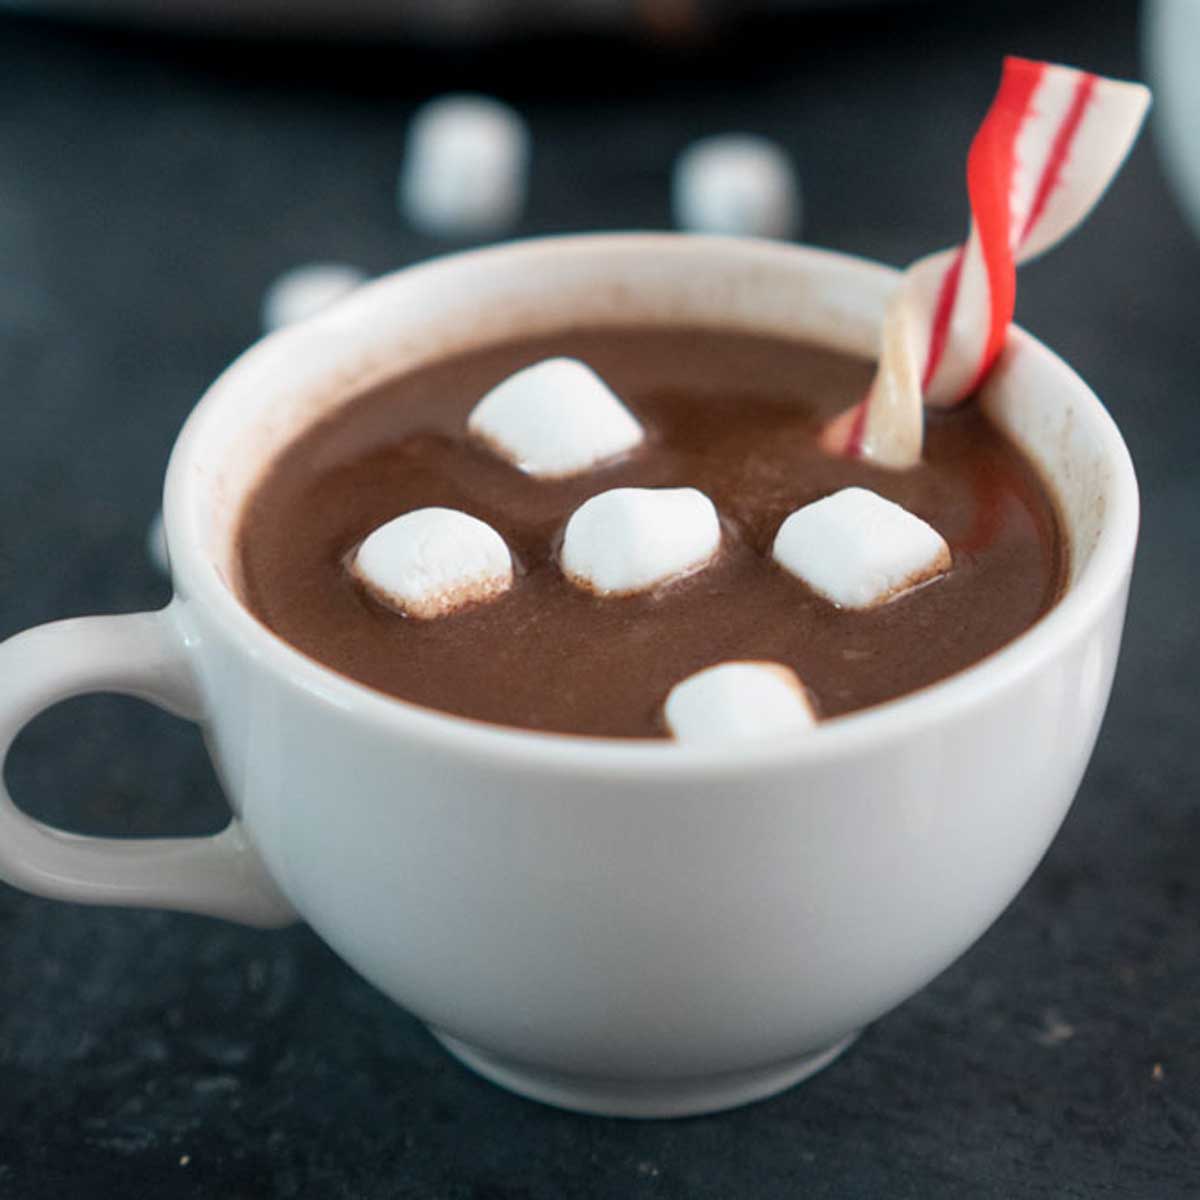 https://thehappierhomemaker.com/wp-content/uploads/2018/12/slow-cooker-hot-chocolate-1.jpg